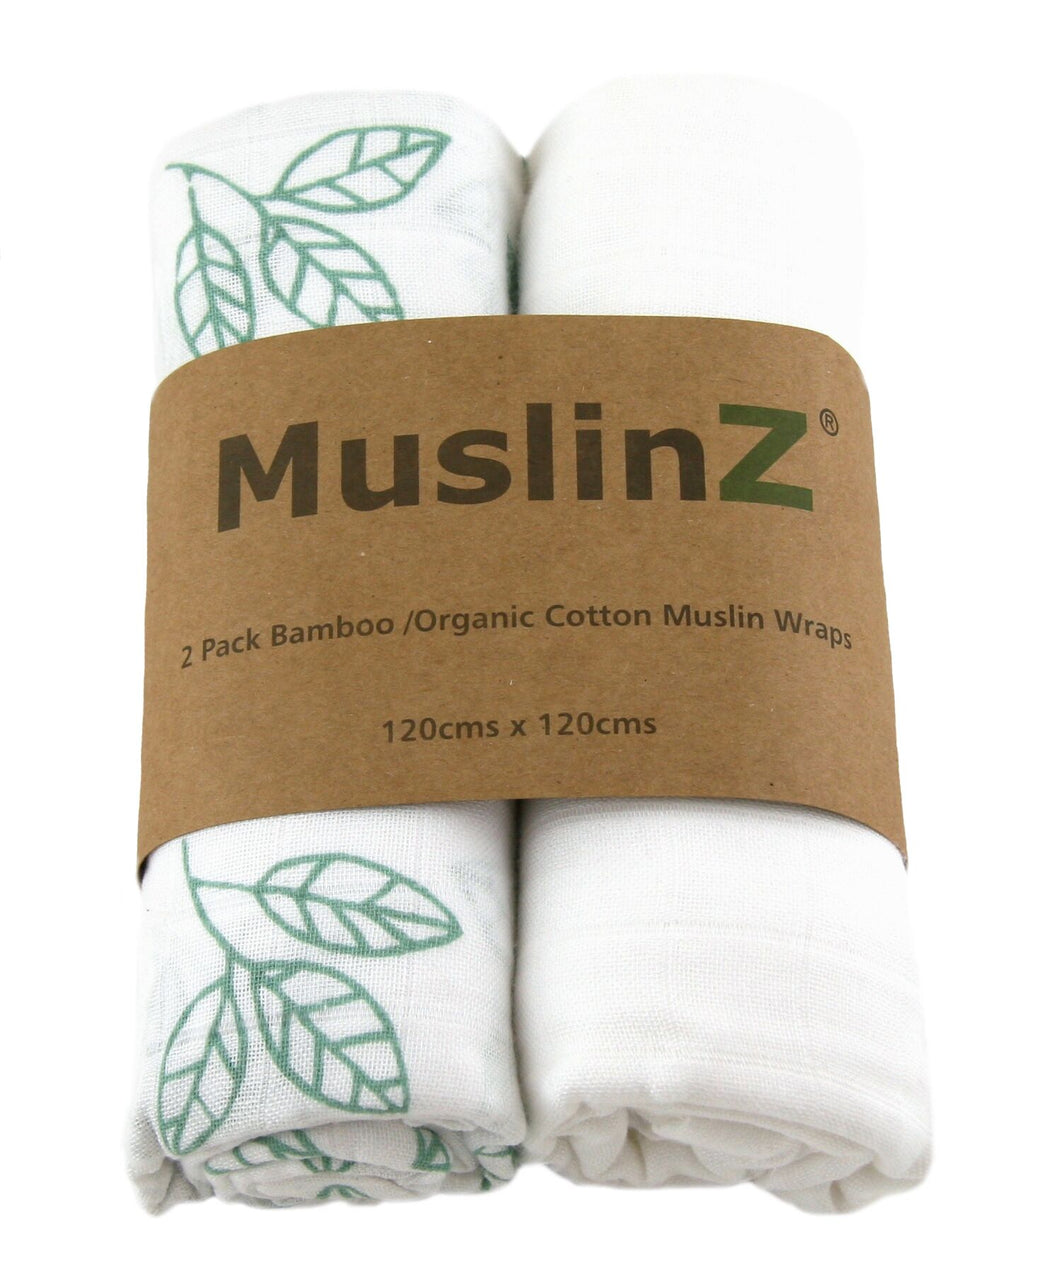 MuslinZ 2 Pack Bamboo/Organic Cotton Muslin Wraps 120x120cm - White Leaf/Print - White/Aqua Leaf - The Monkey Box